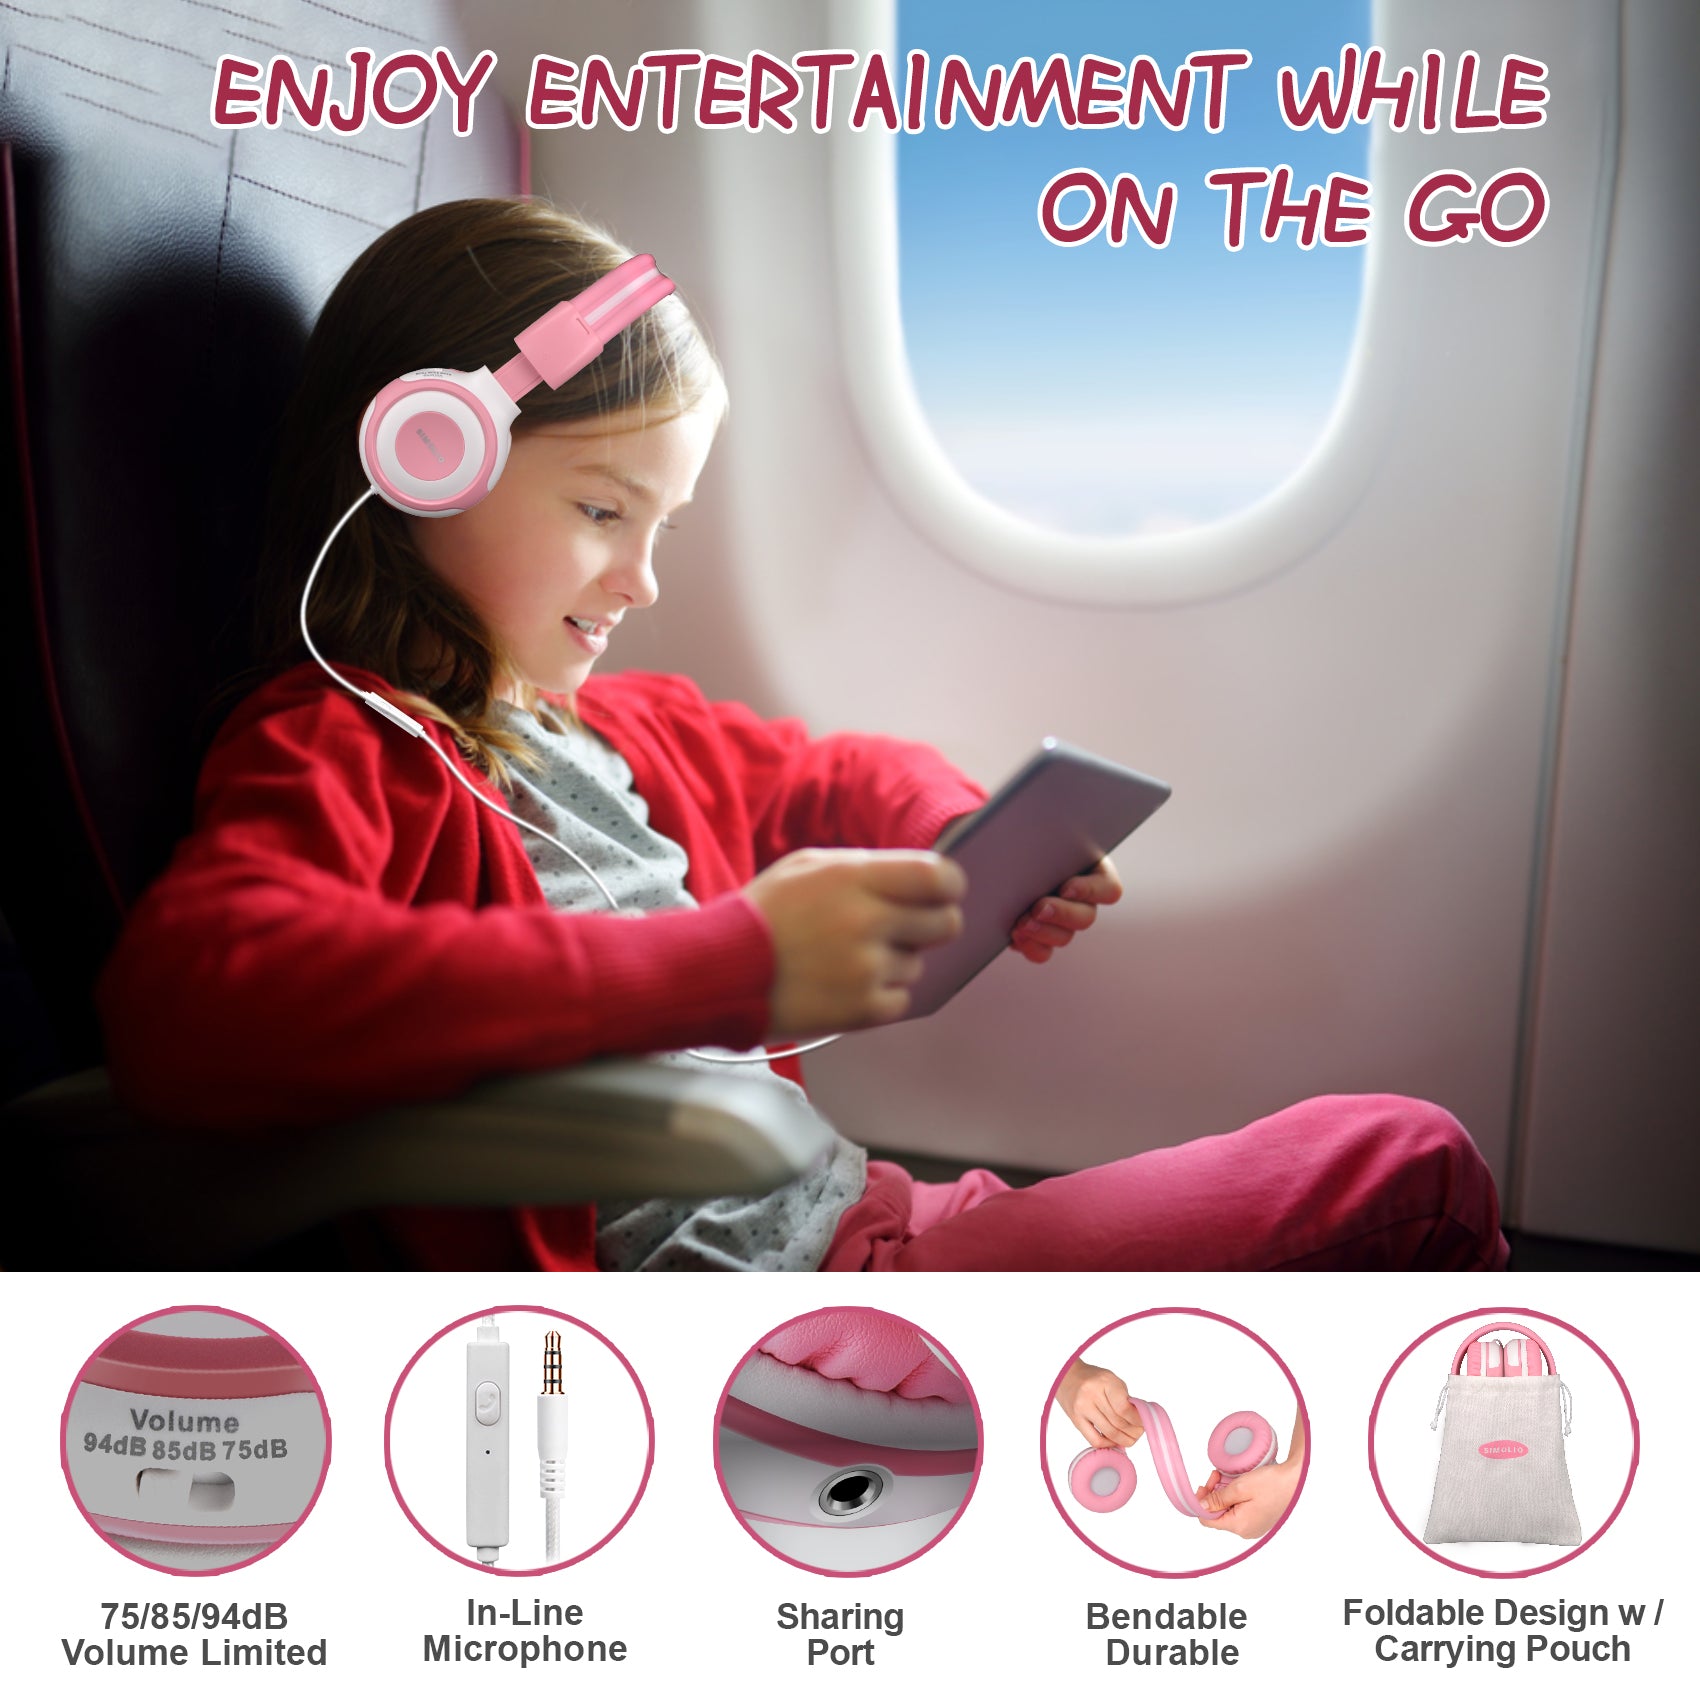 Kids is watching movies using Simolio wired headphones SM-903 on the plane